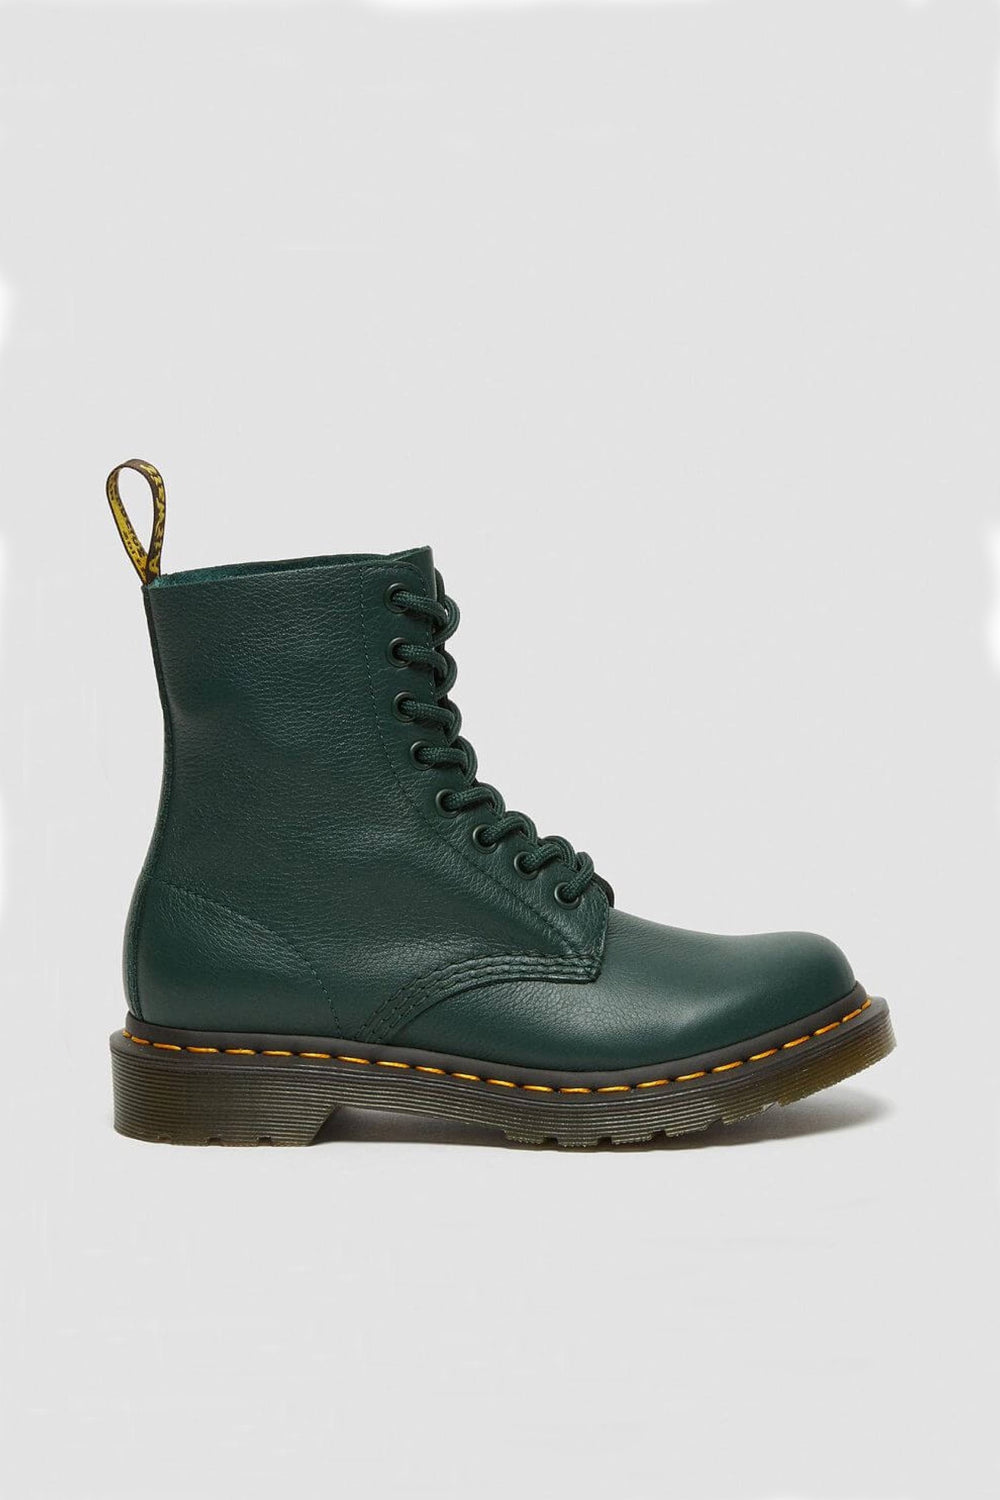 Pine Green 1460 Pascal Boot